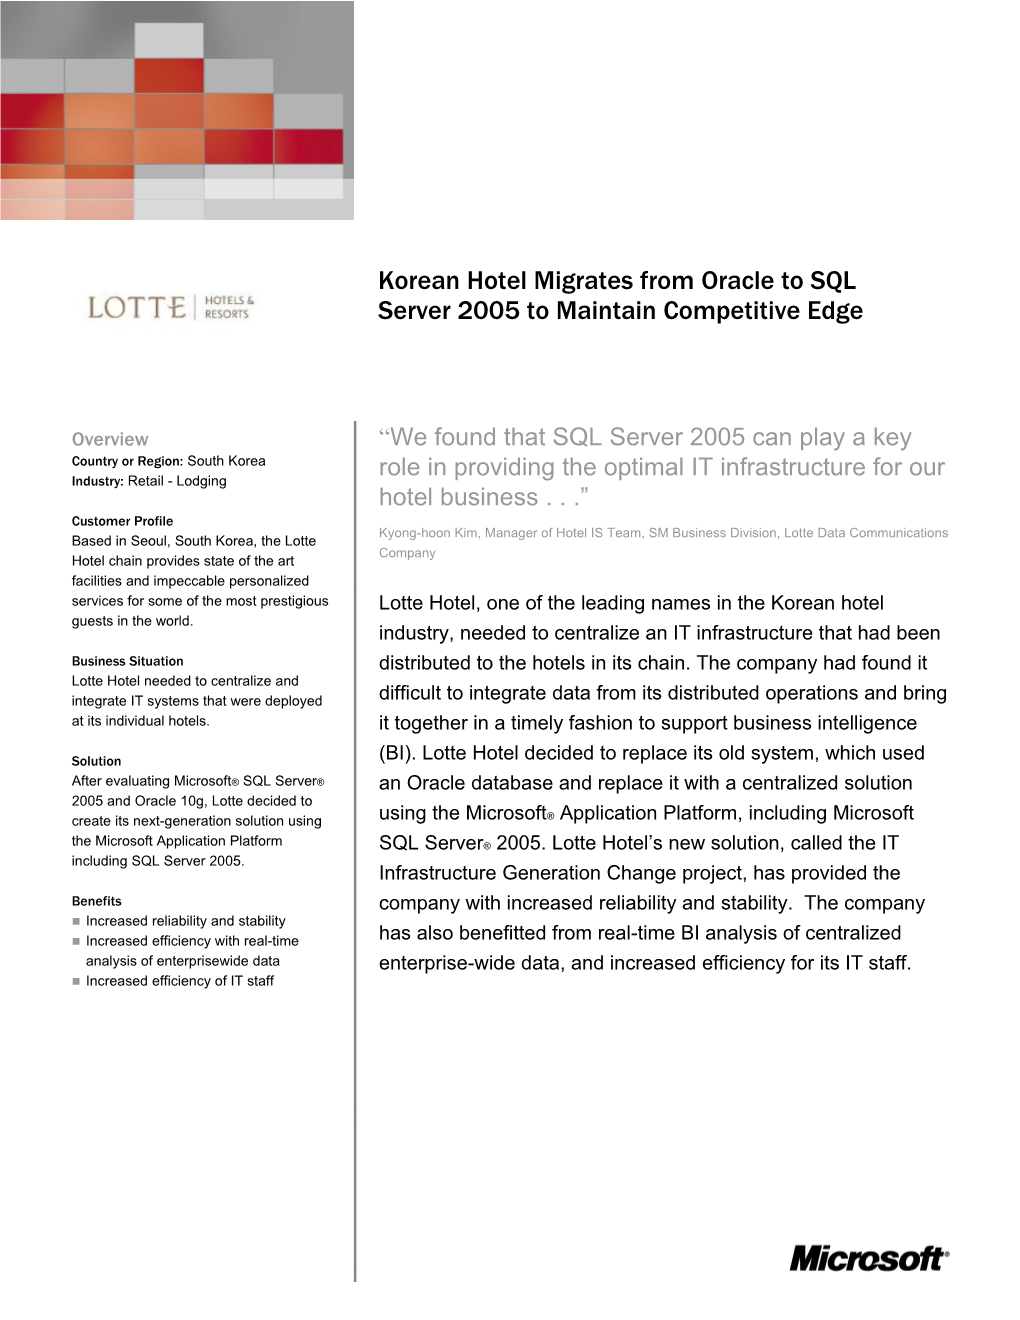 Lotte Hotel - SQL Server 2005 Case Study